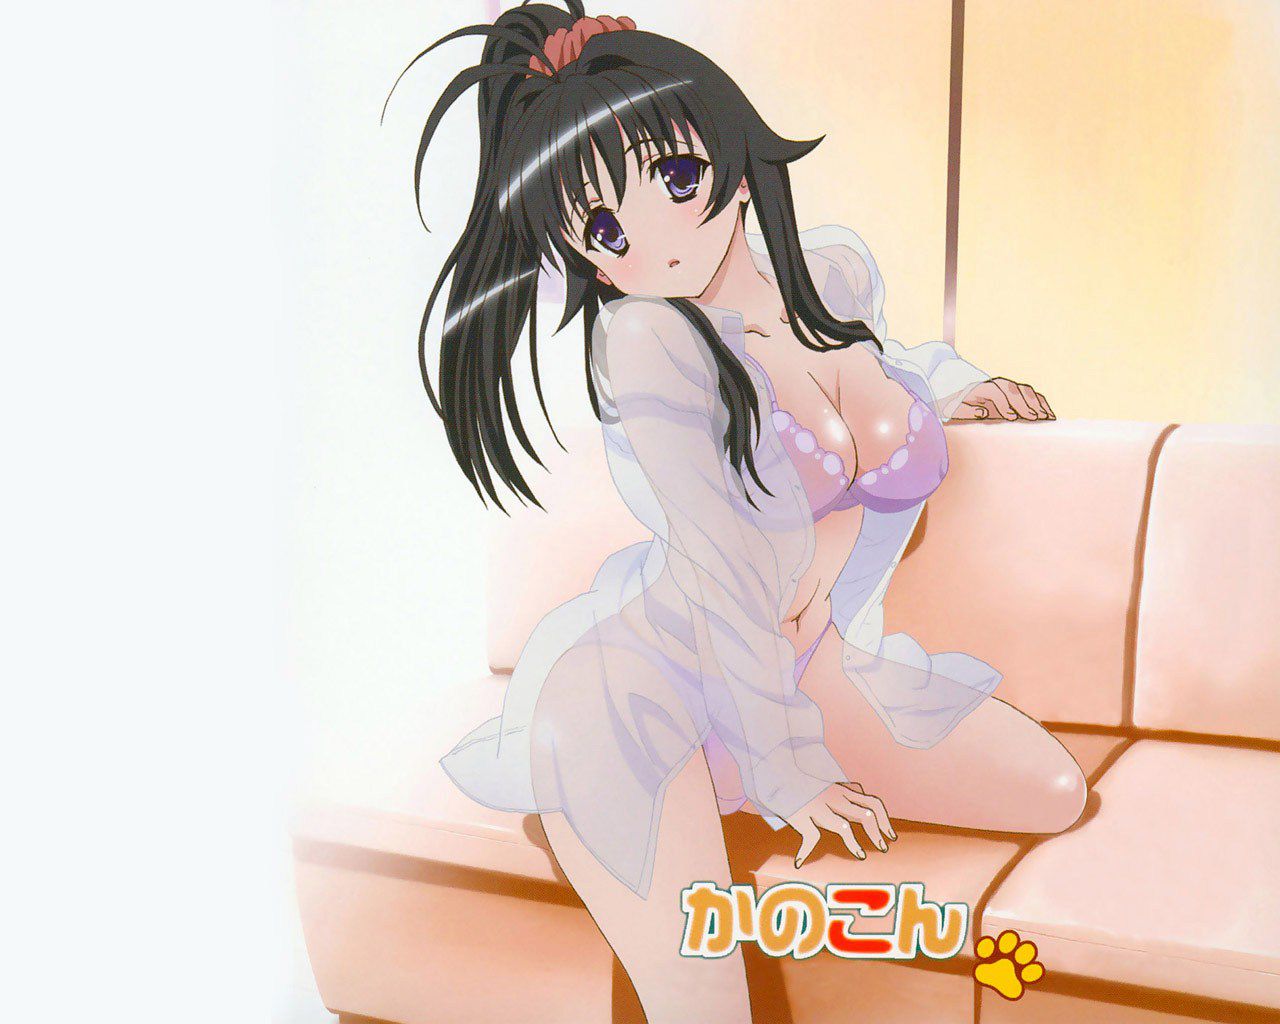 [Kanokon] Source Chizuru-chan and heroine erotic images part3 10